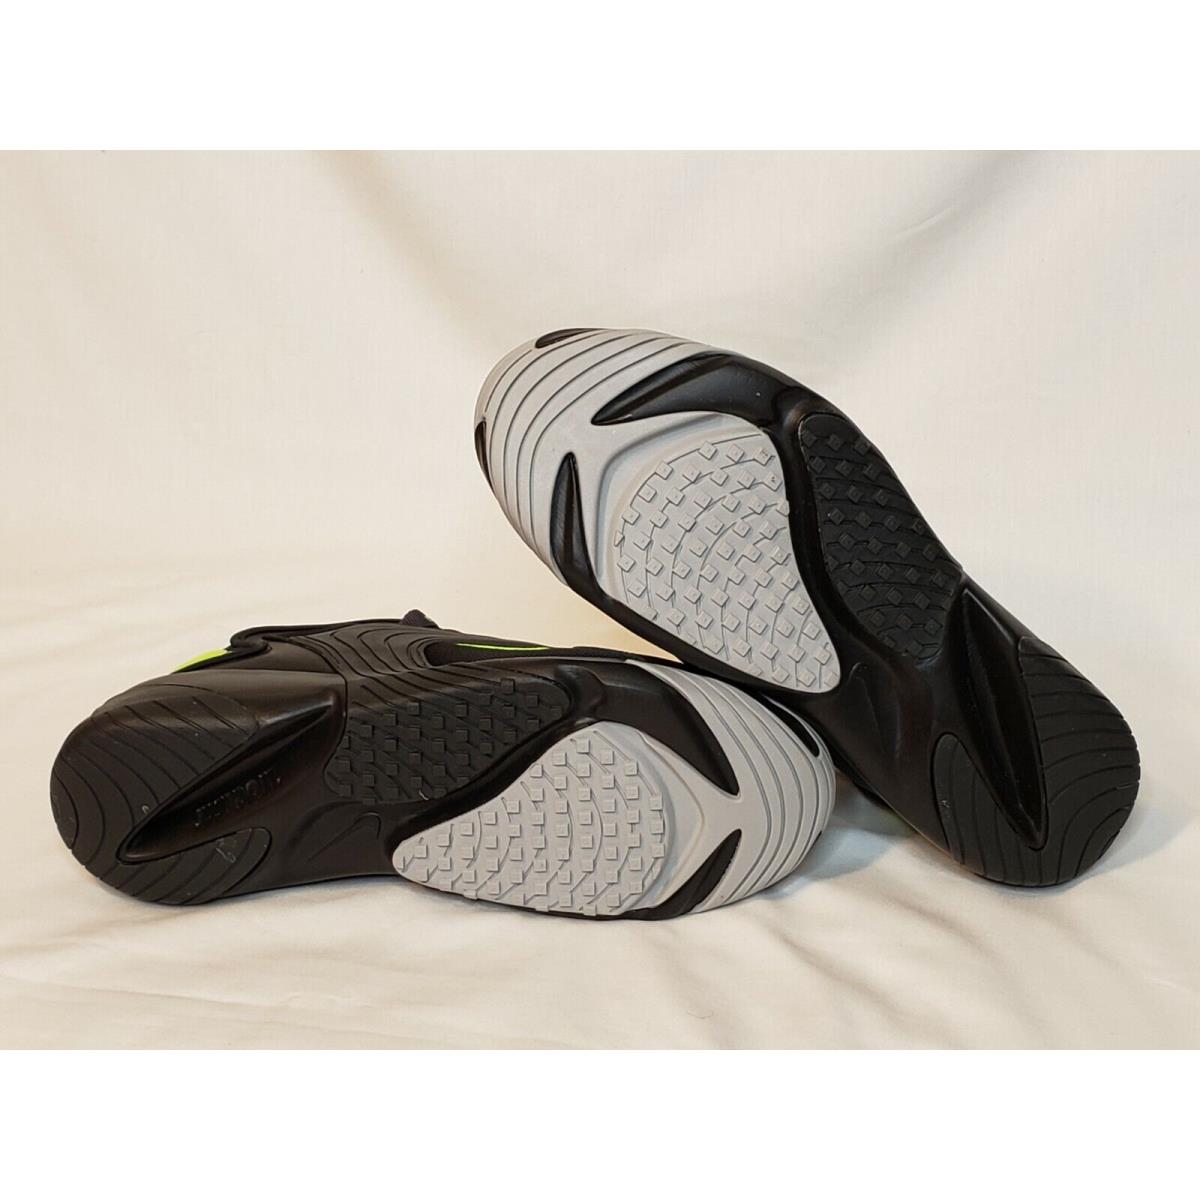 Nike shoes Zoom - Black/Volt-Anthracite 10